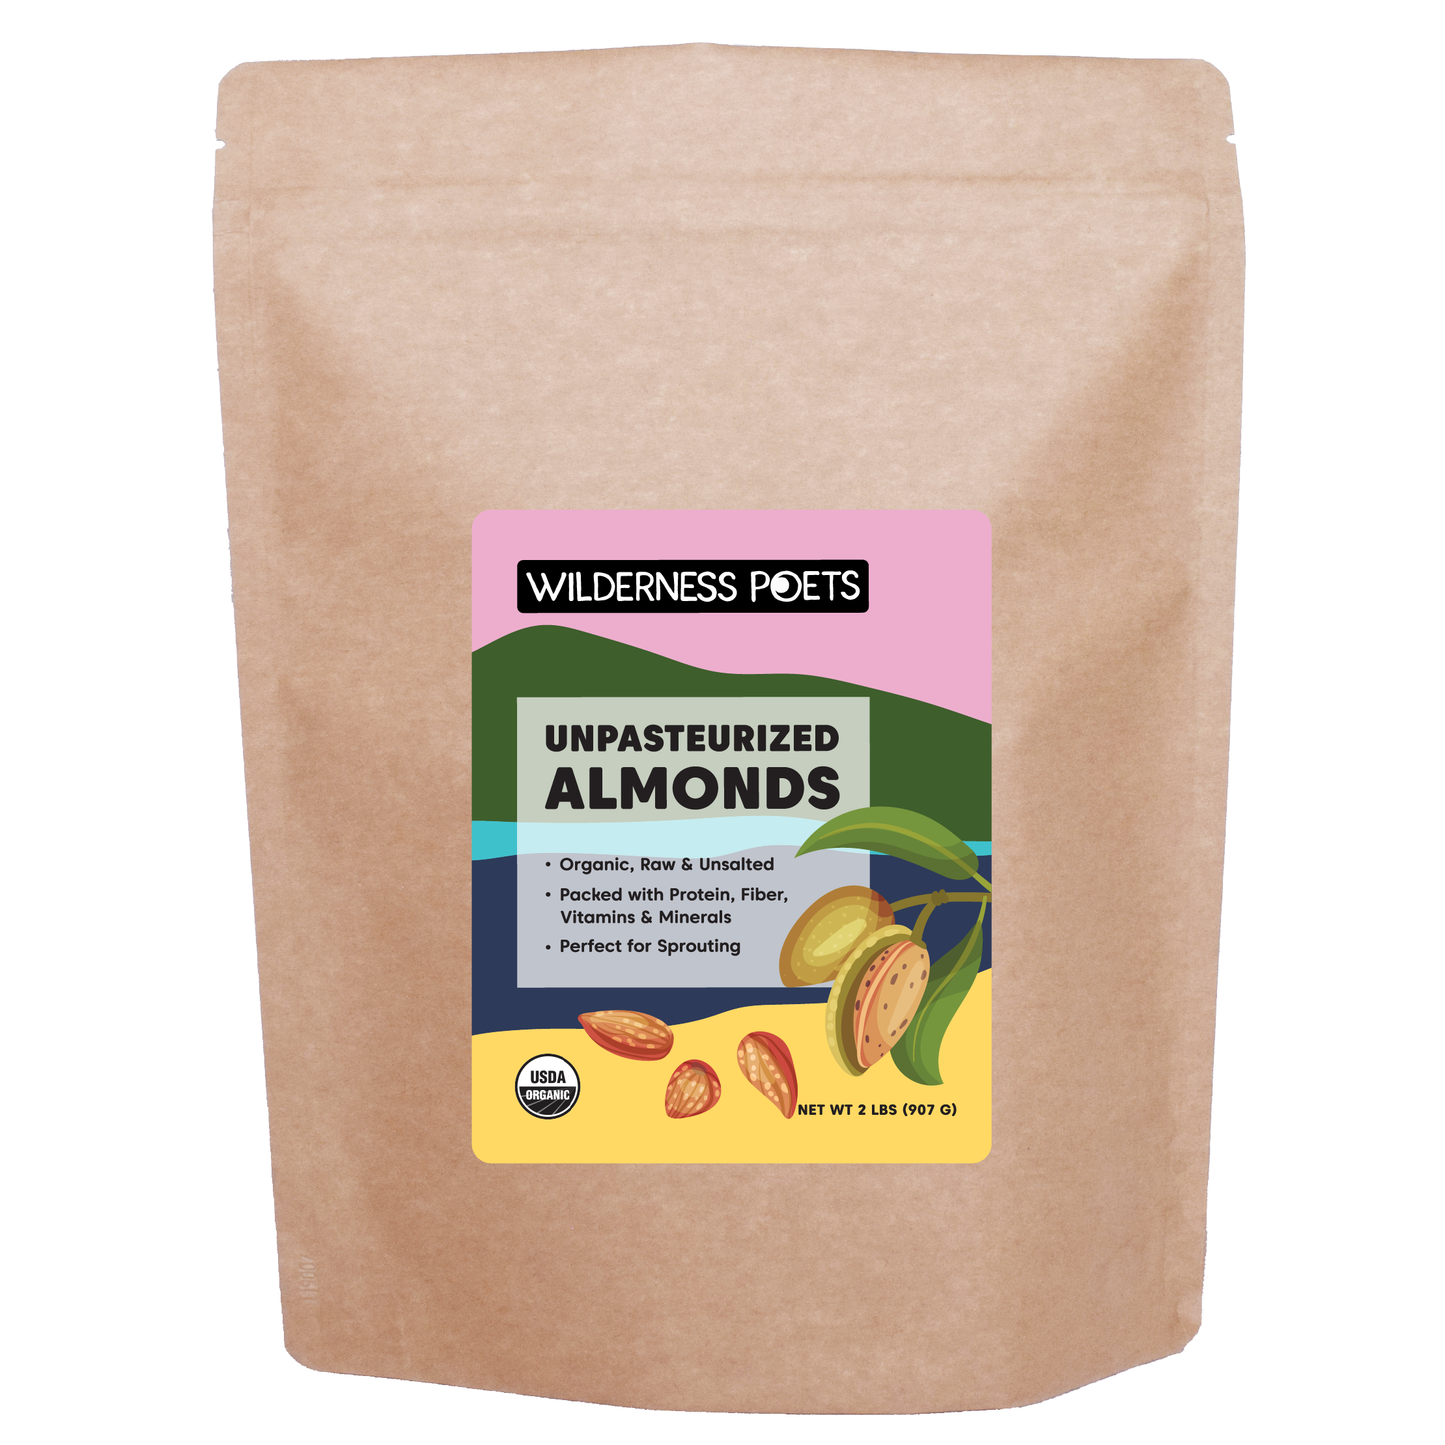 Almonds - Unpasteurized, Organic